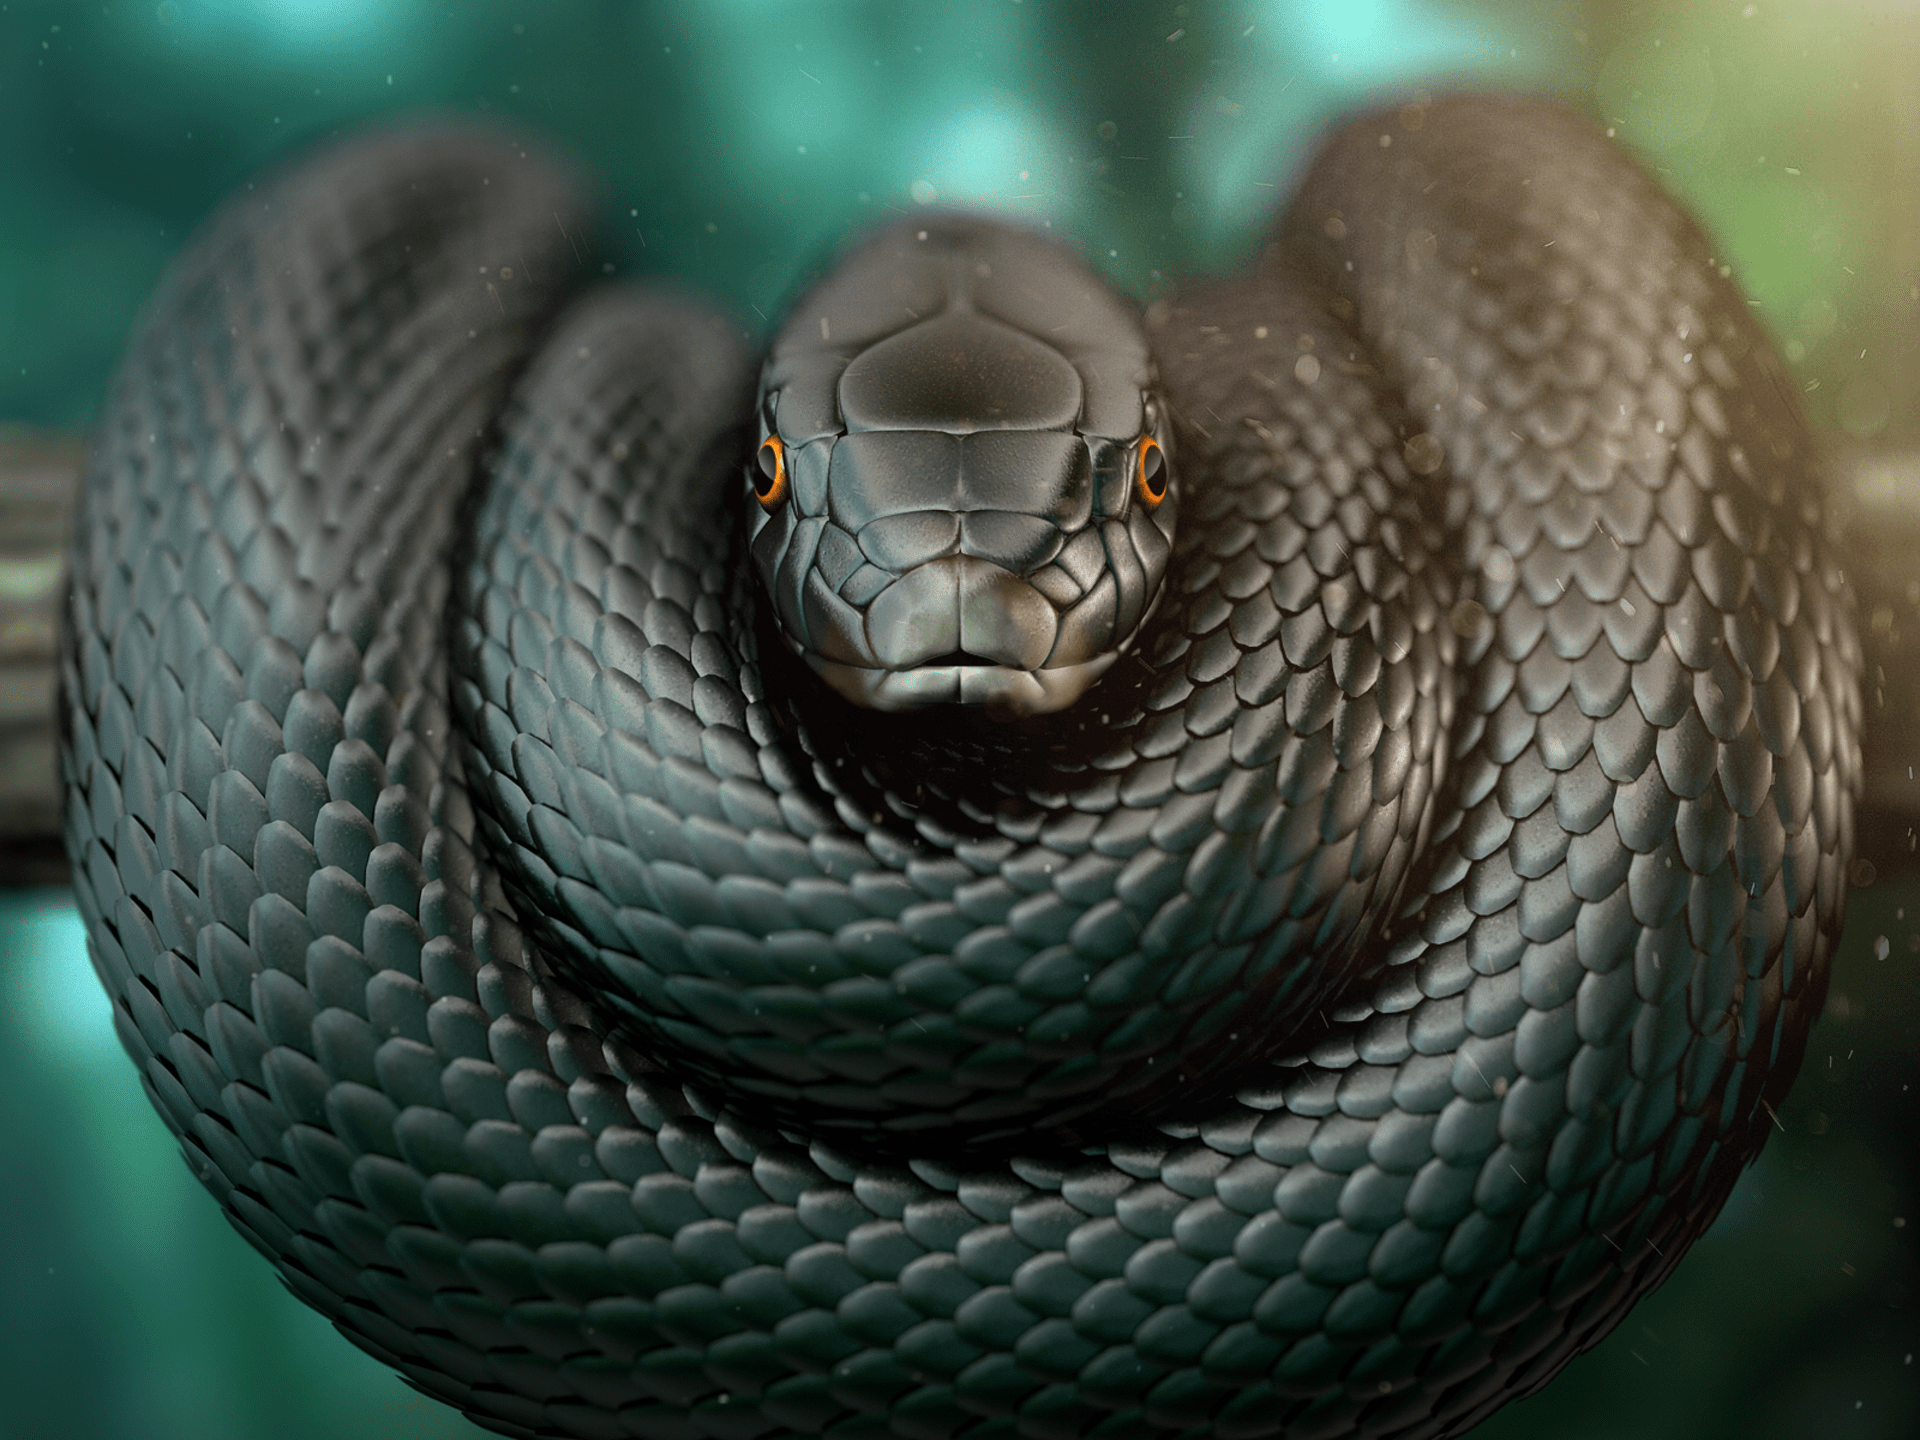 Black Mamba How A Snake Inspired Kobe Bryant S Beloved Nickname Nature And Wildlife Discovery